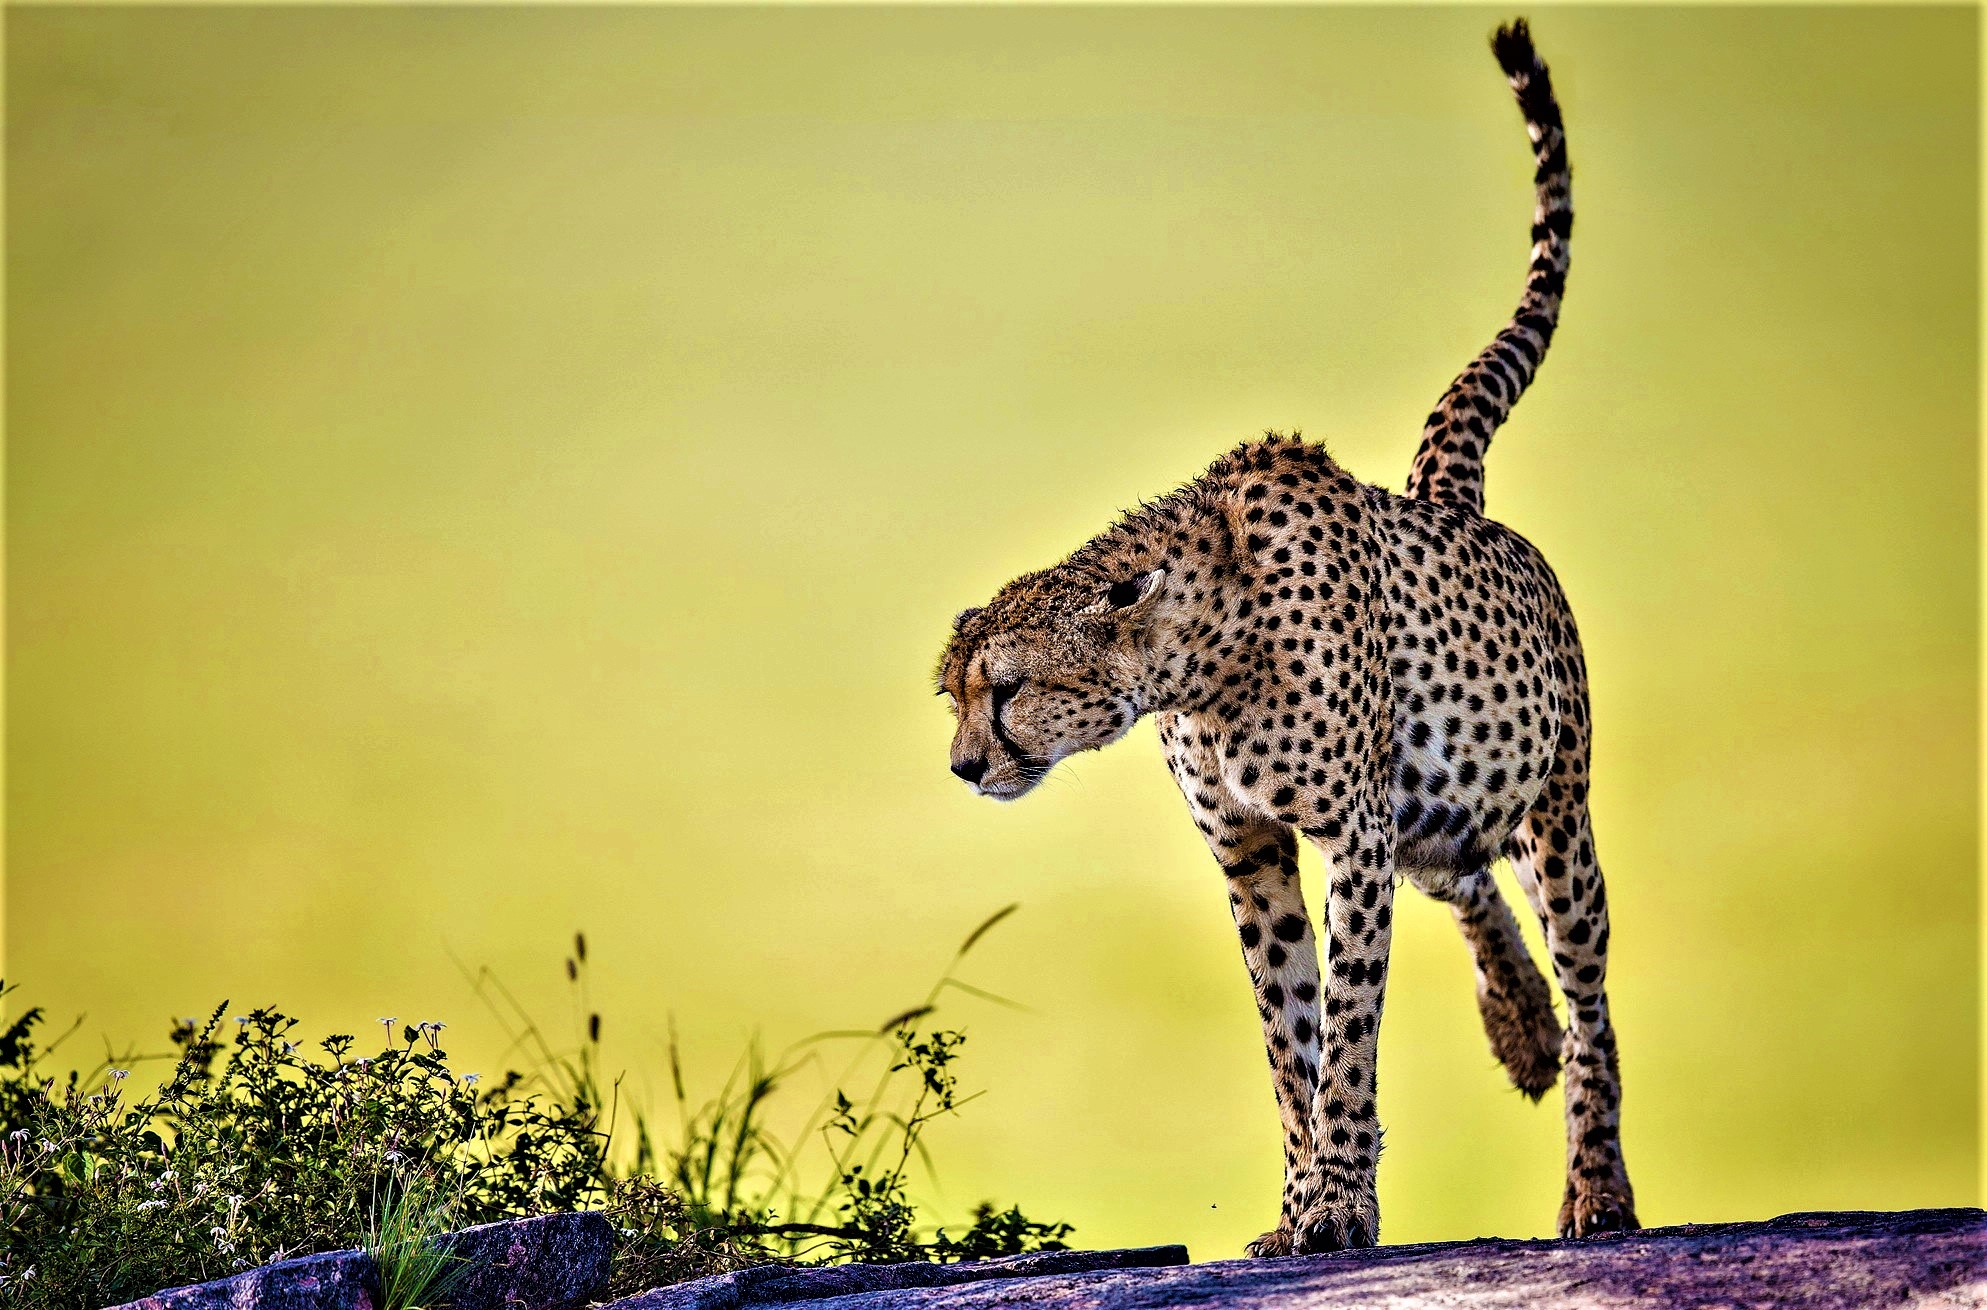 Big Cat Cheetah Wildlife Predator Animal 1987x1310